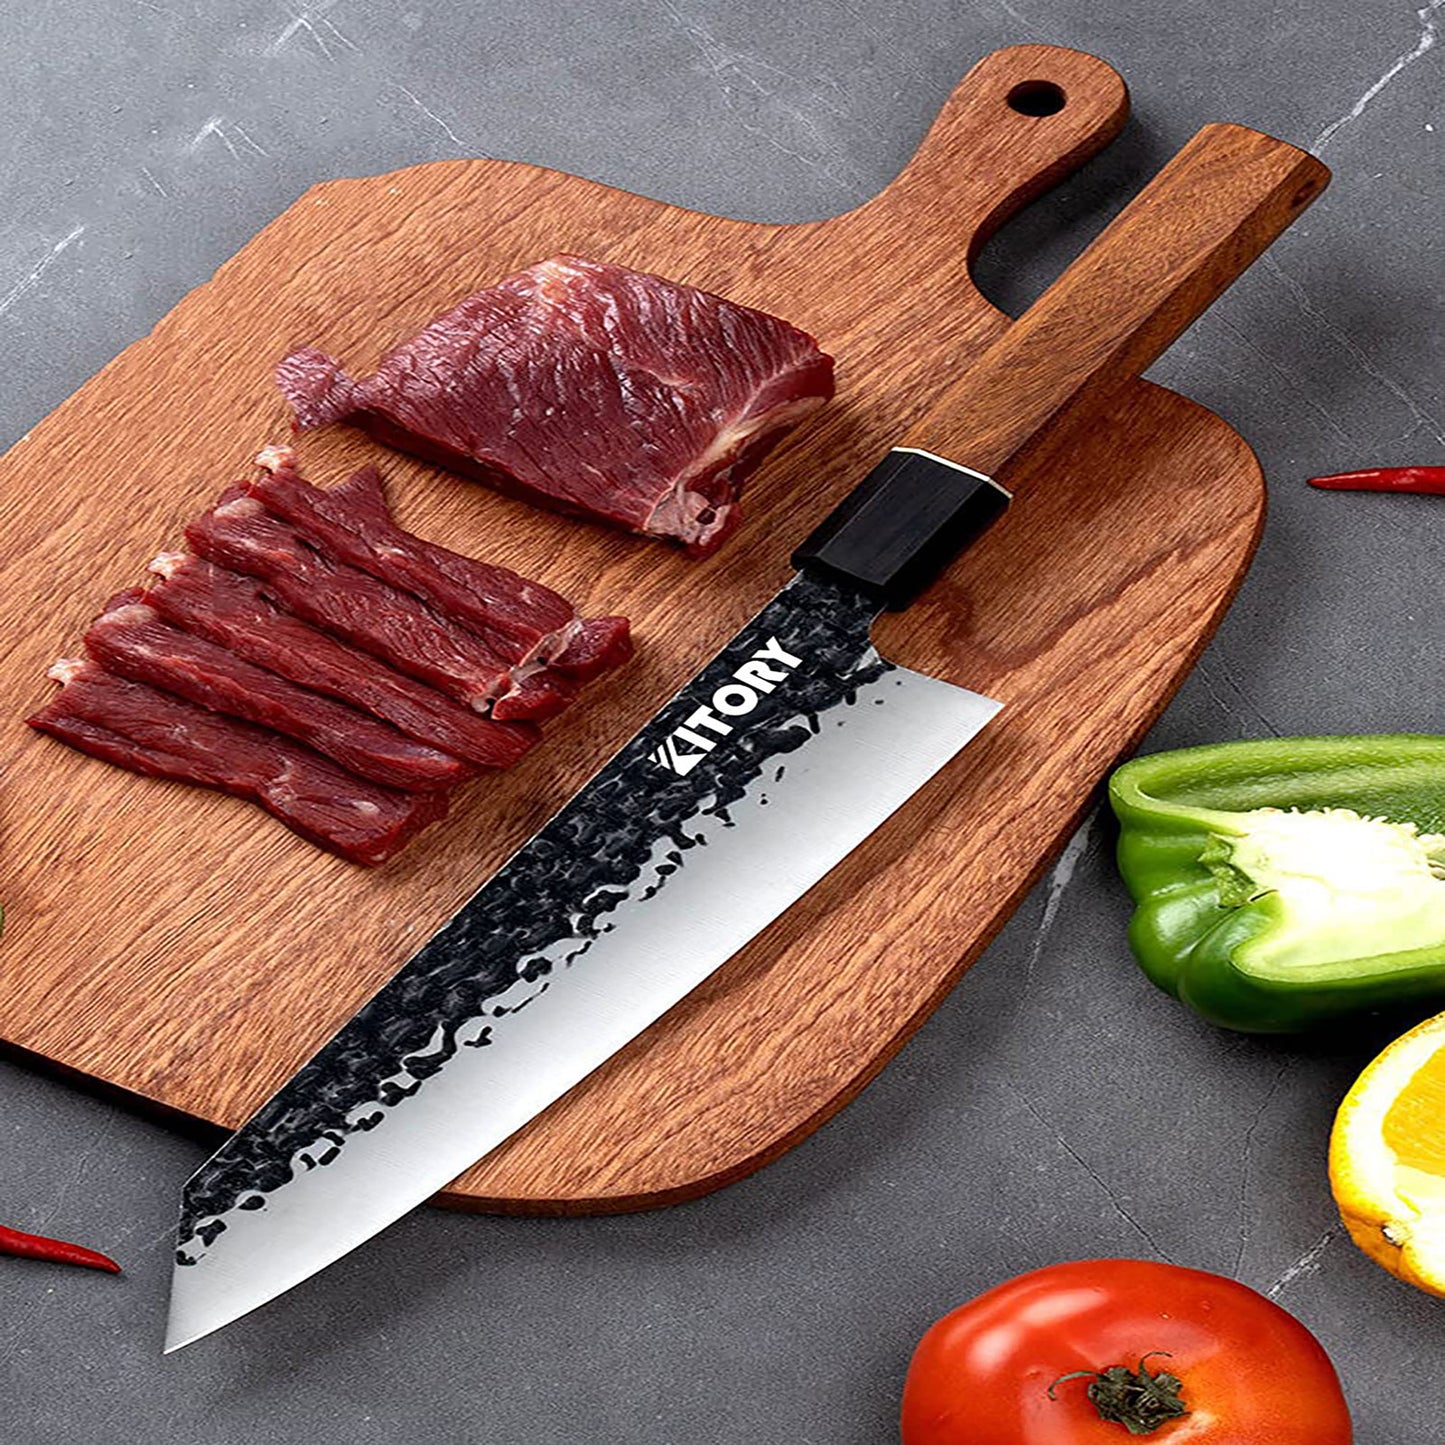 Kitory Japanese Kiritsuke Knife 9 Inch Clad Steel With Gift Box